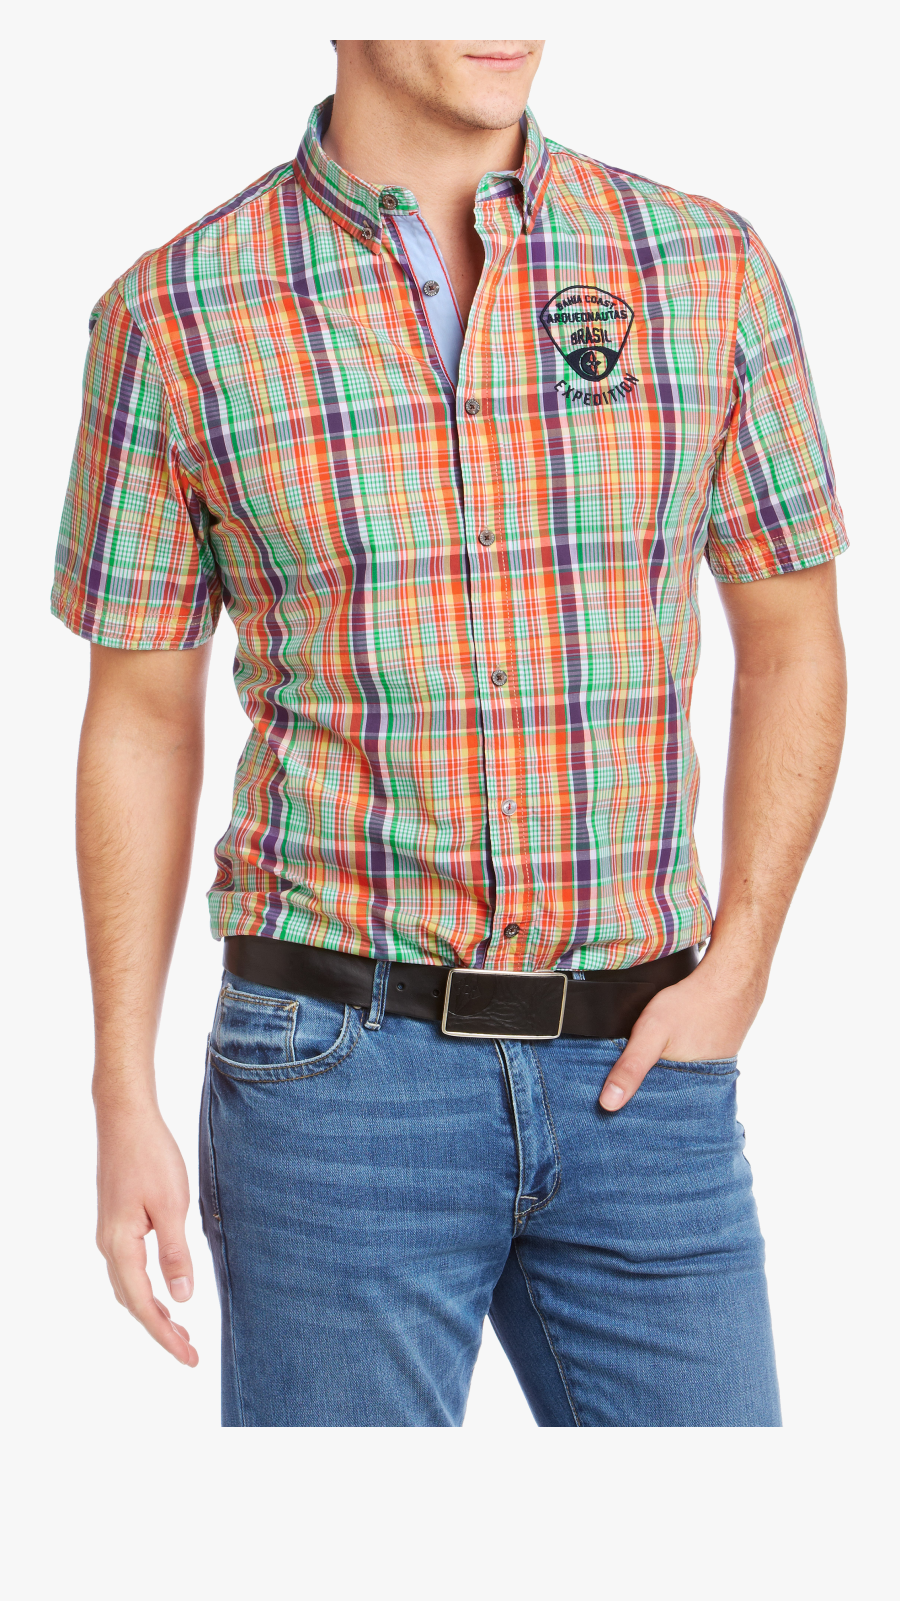 Shirt With Man Png, Transparent Clipart